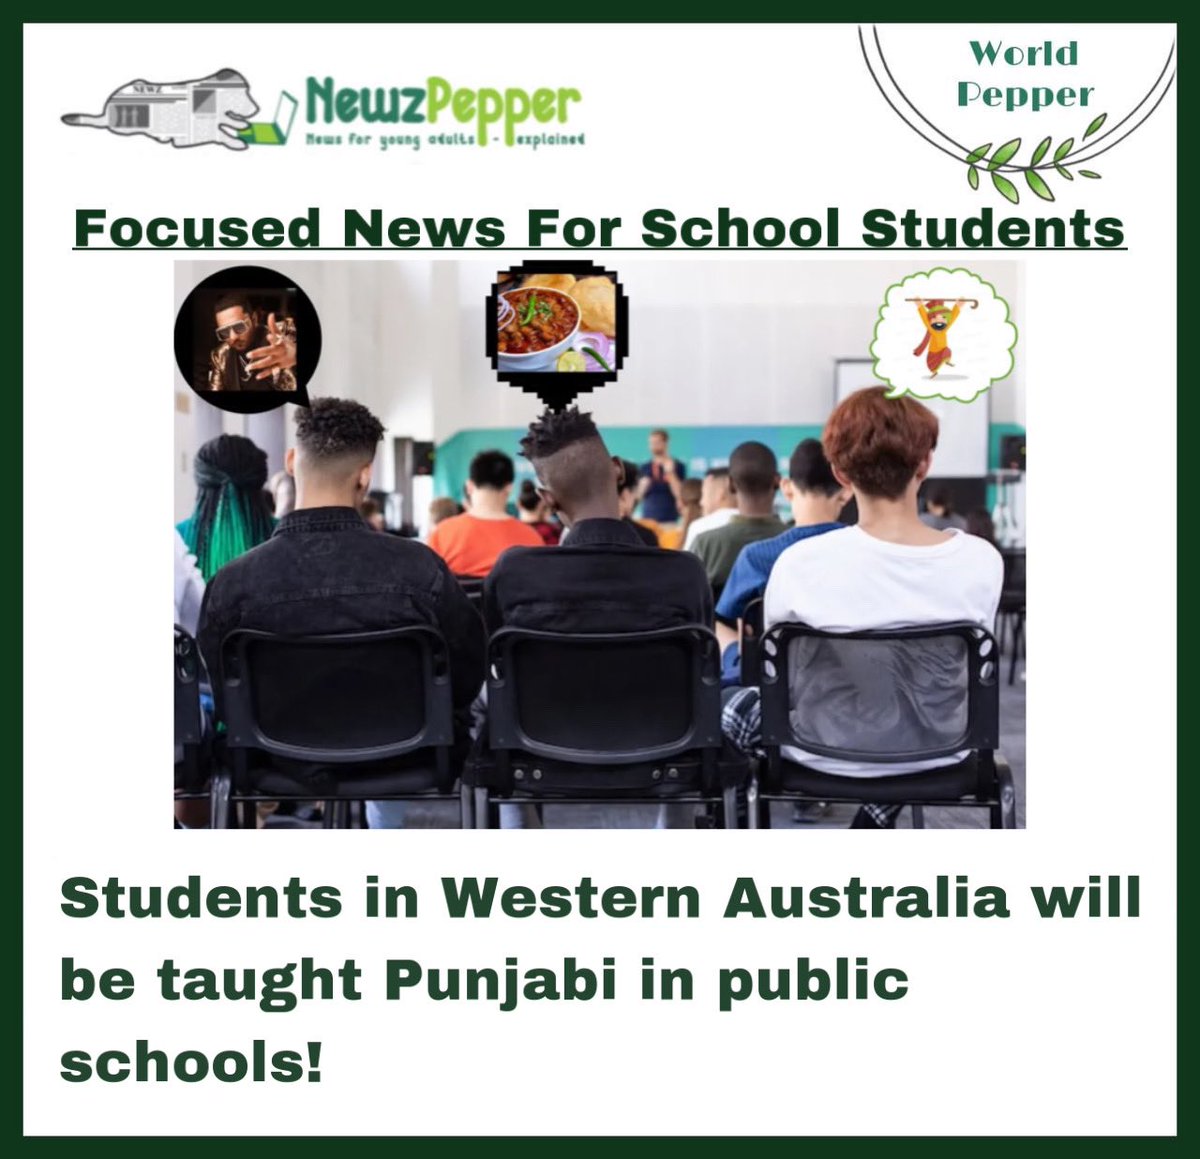 To read the full article, visit
newzpepper.com!
#indianschools #news #newsupdate
#newspaper #dailynews #dailynewspaper
#follow #instadaily #instagram #australia
#westernaustralia #language #education
#australiagram #punjabi #punjabilove
#australiaeducation